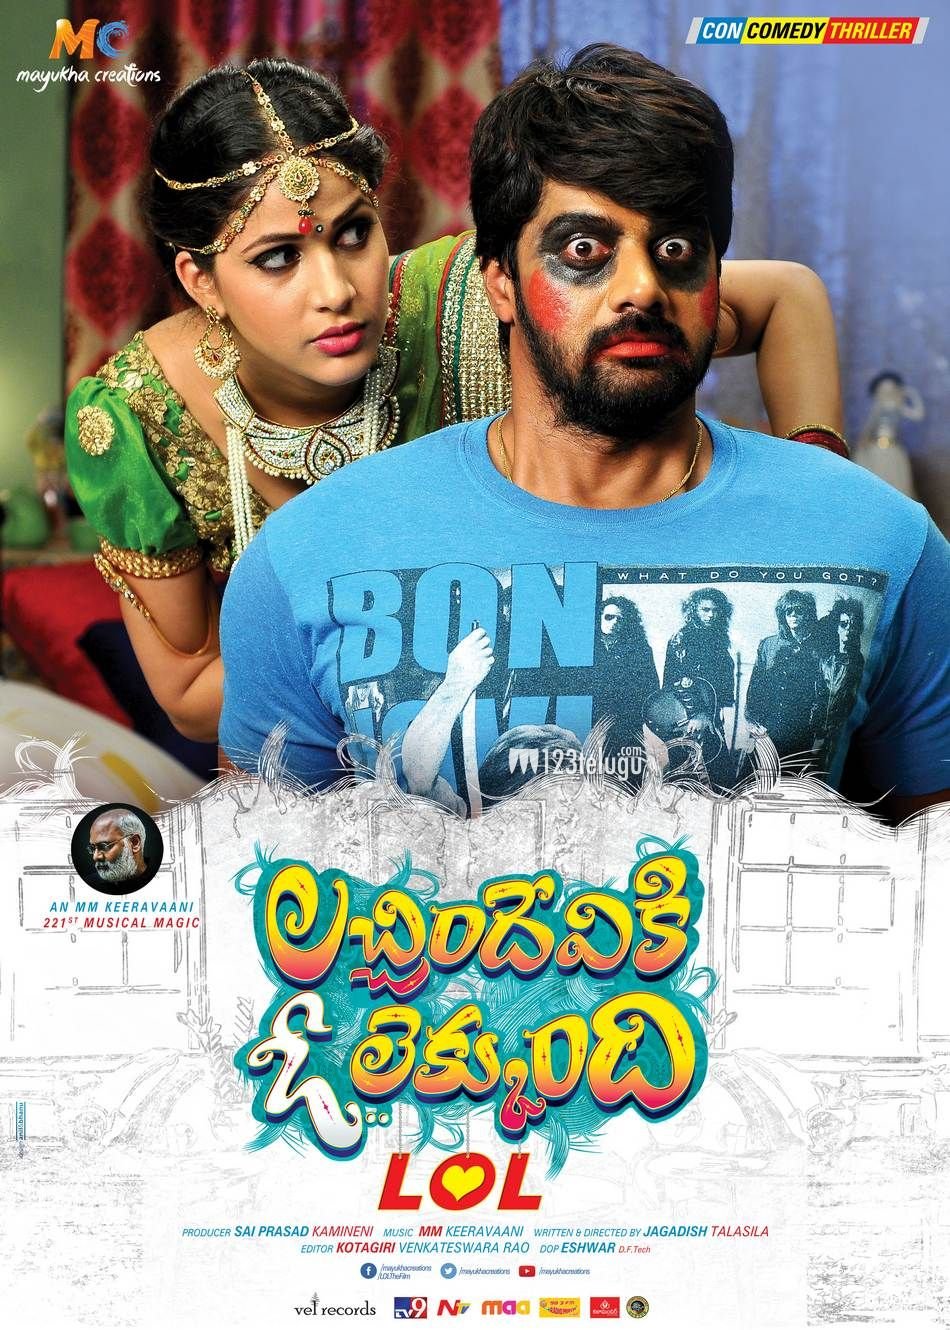 Telugu poster of the movie Lacchimdeviki O Lekkundi